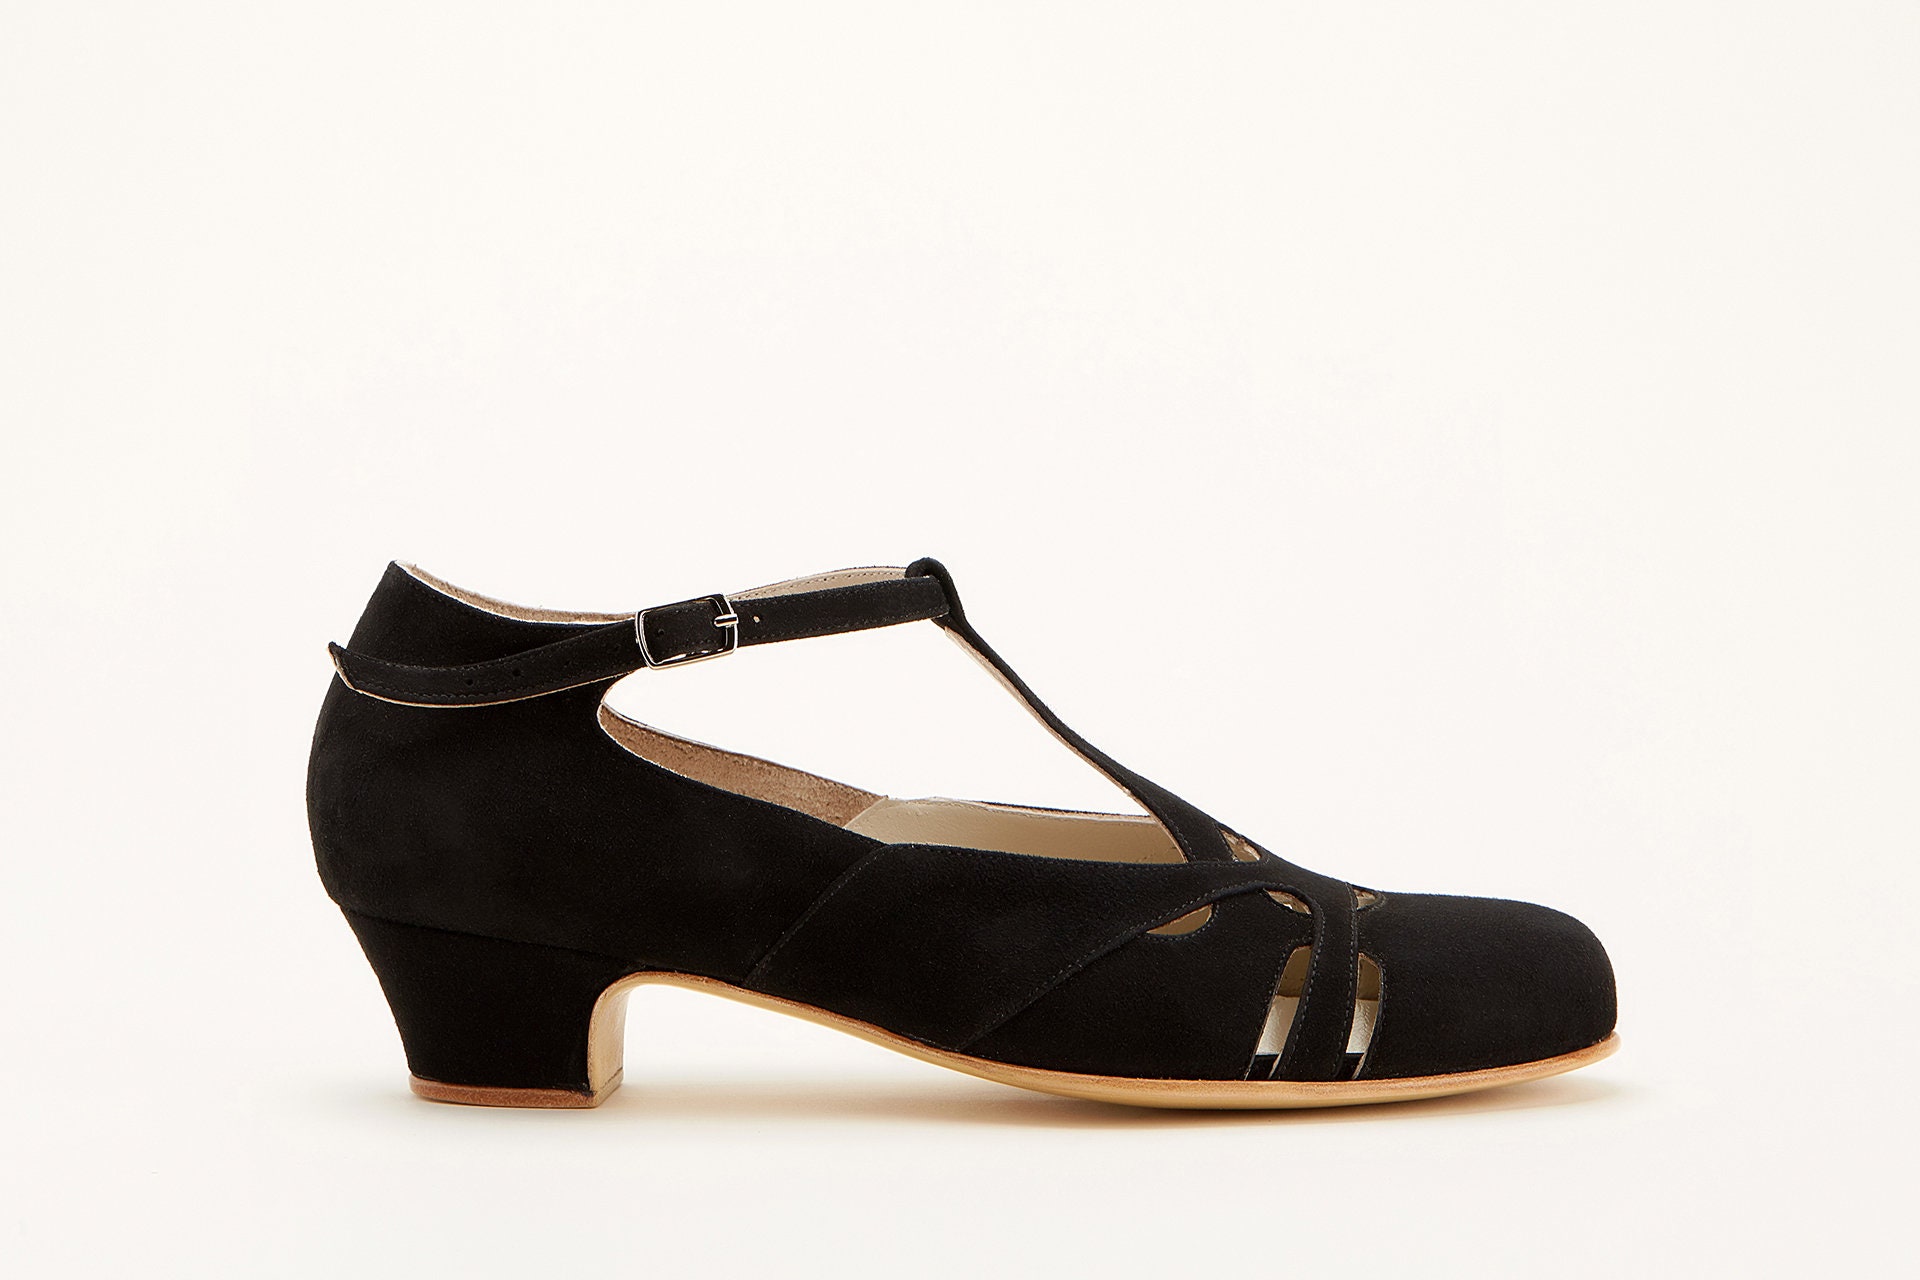 Women Swing Dance Shoes Spring black suede handmade by Harlem | Etsy